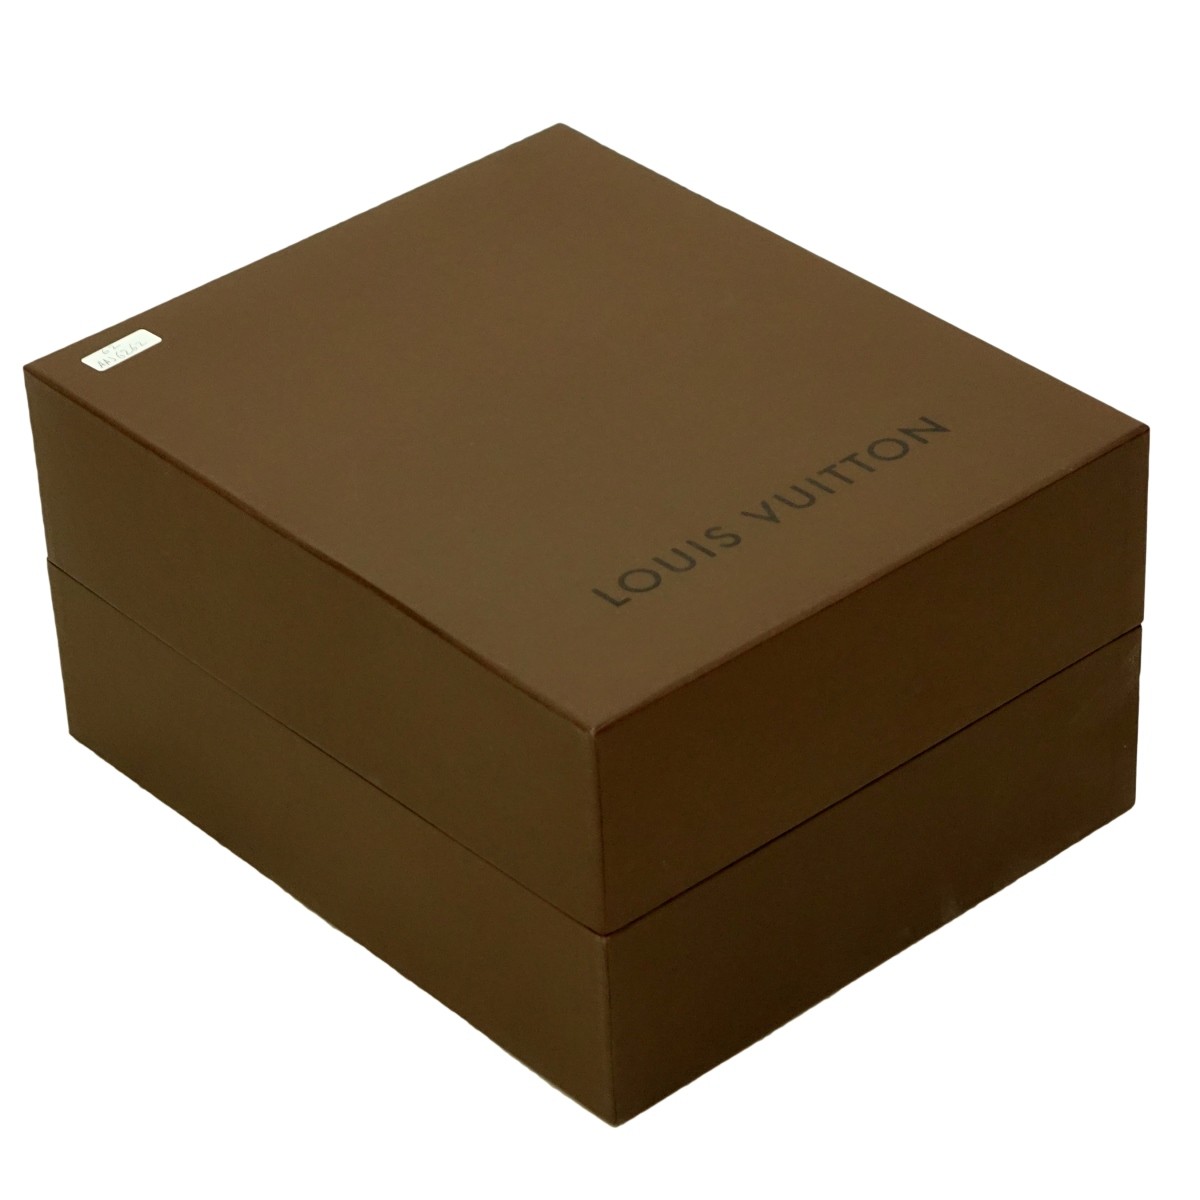 Louis Vuitton Brown Monogram Ellipse PM Bag